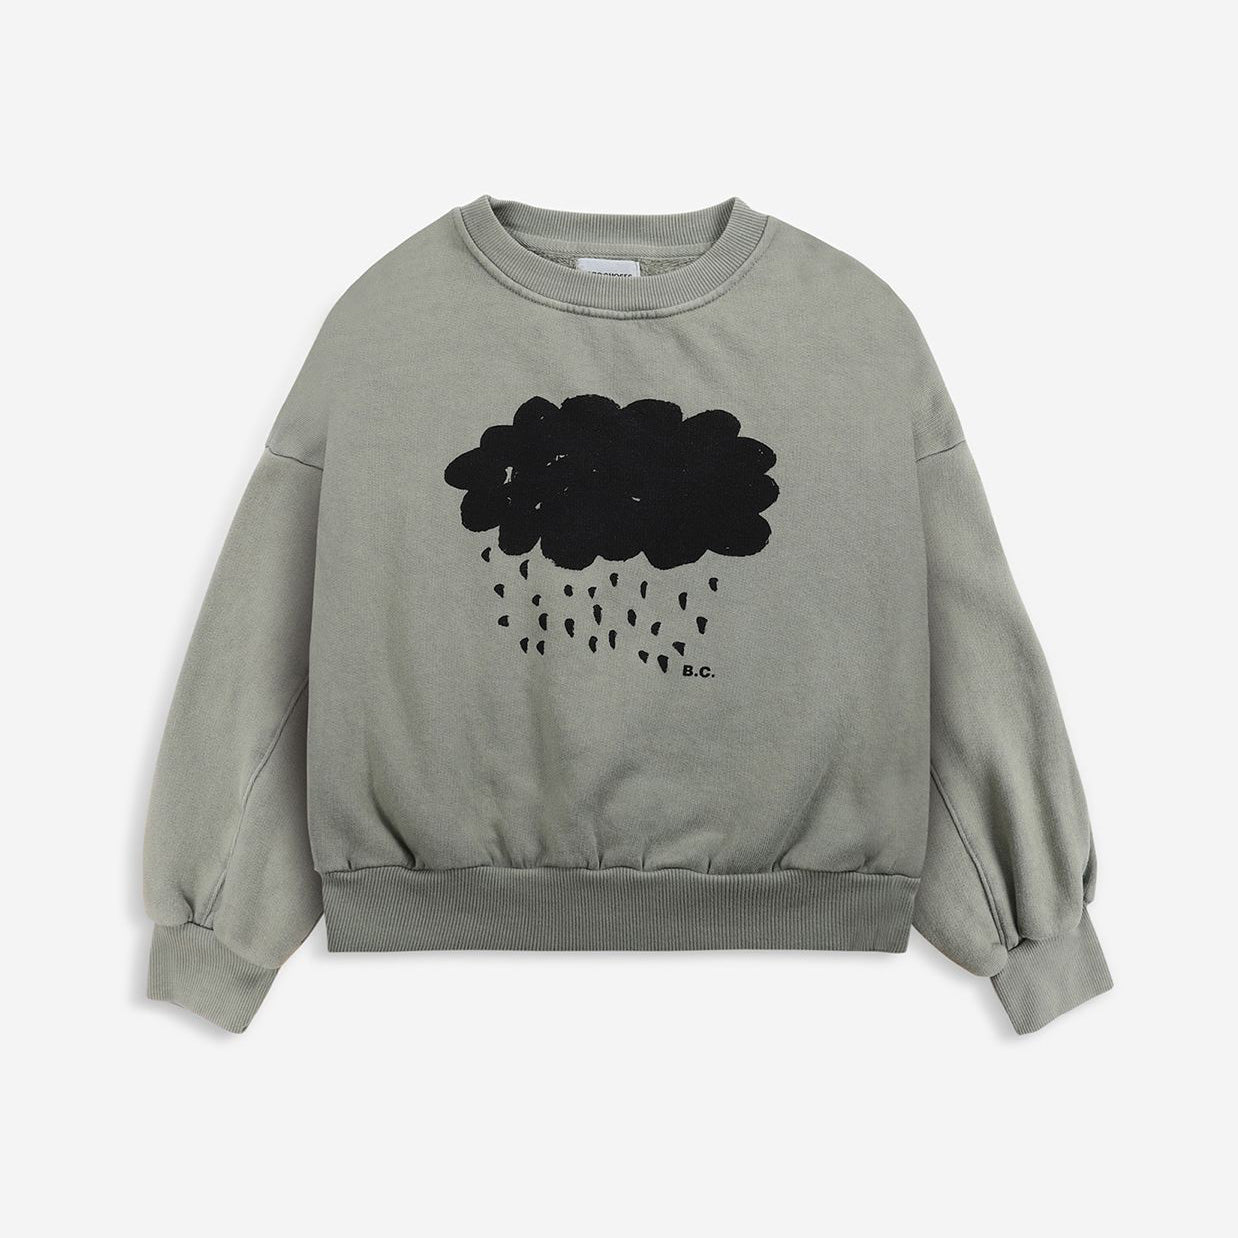 Cloud sweatshirt